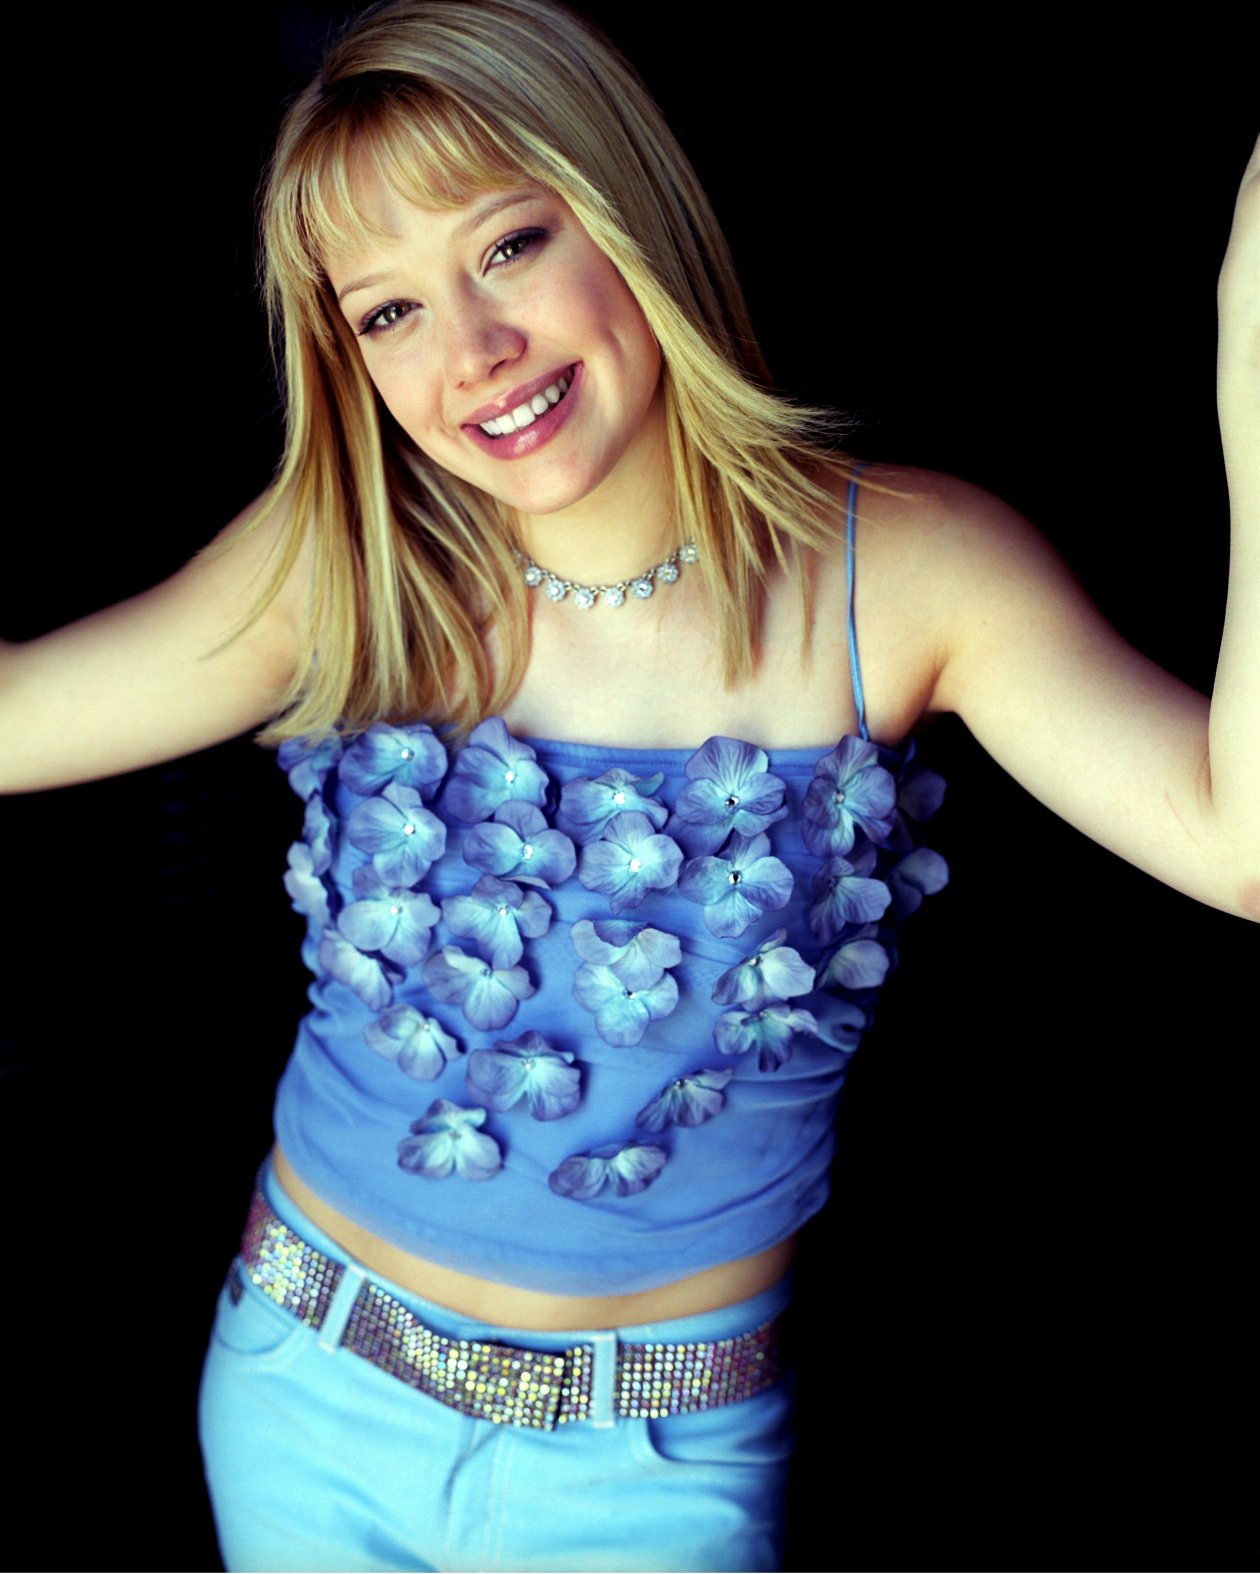 Best Hilary Duff Images On Pinterest Hilary Duff Hilary 2